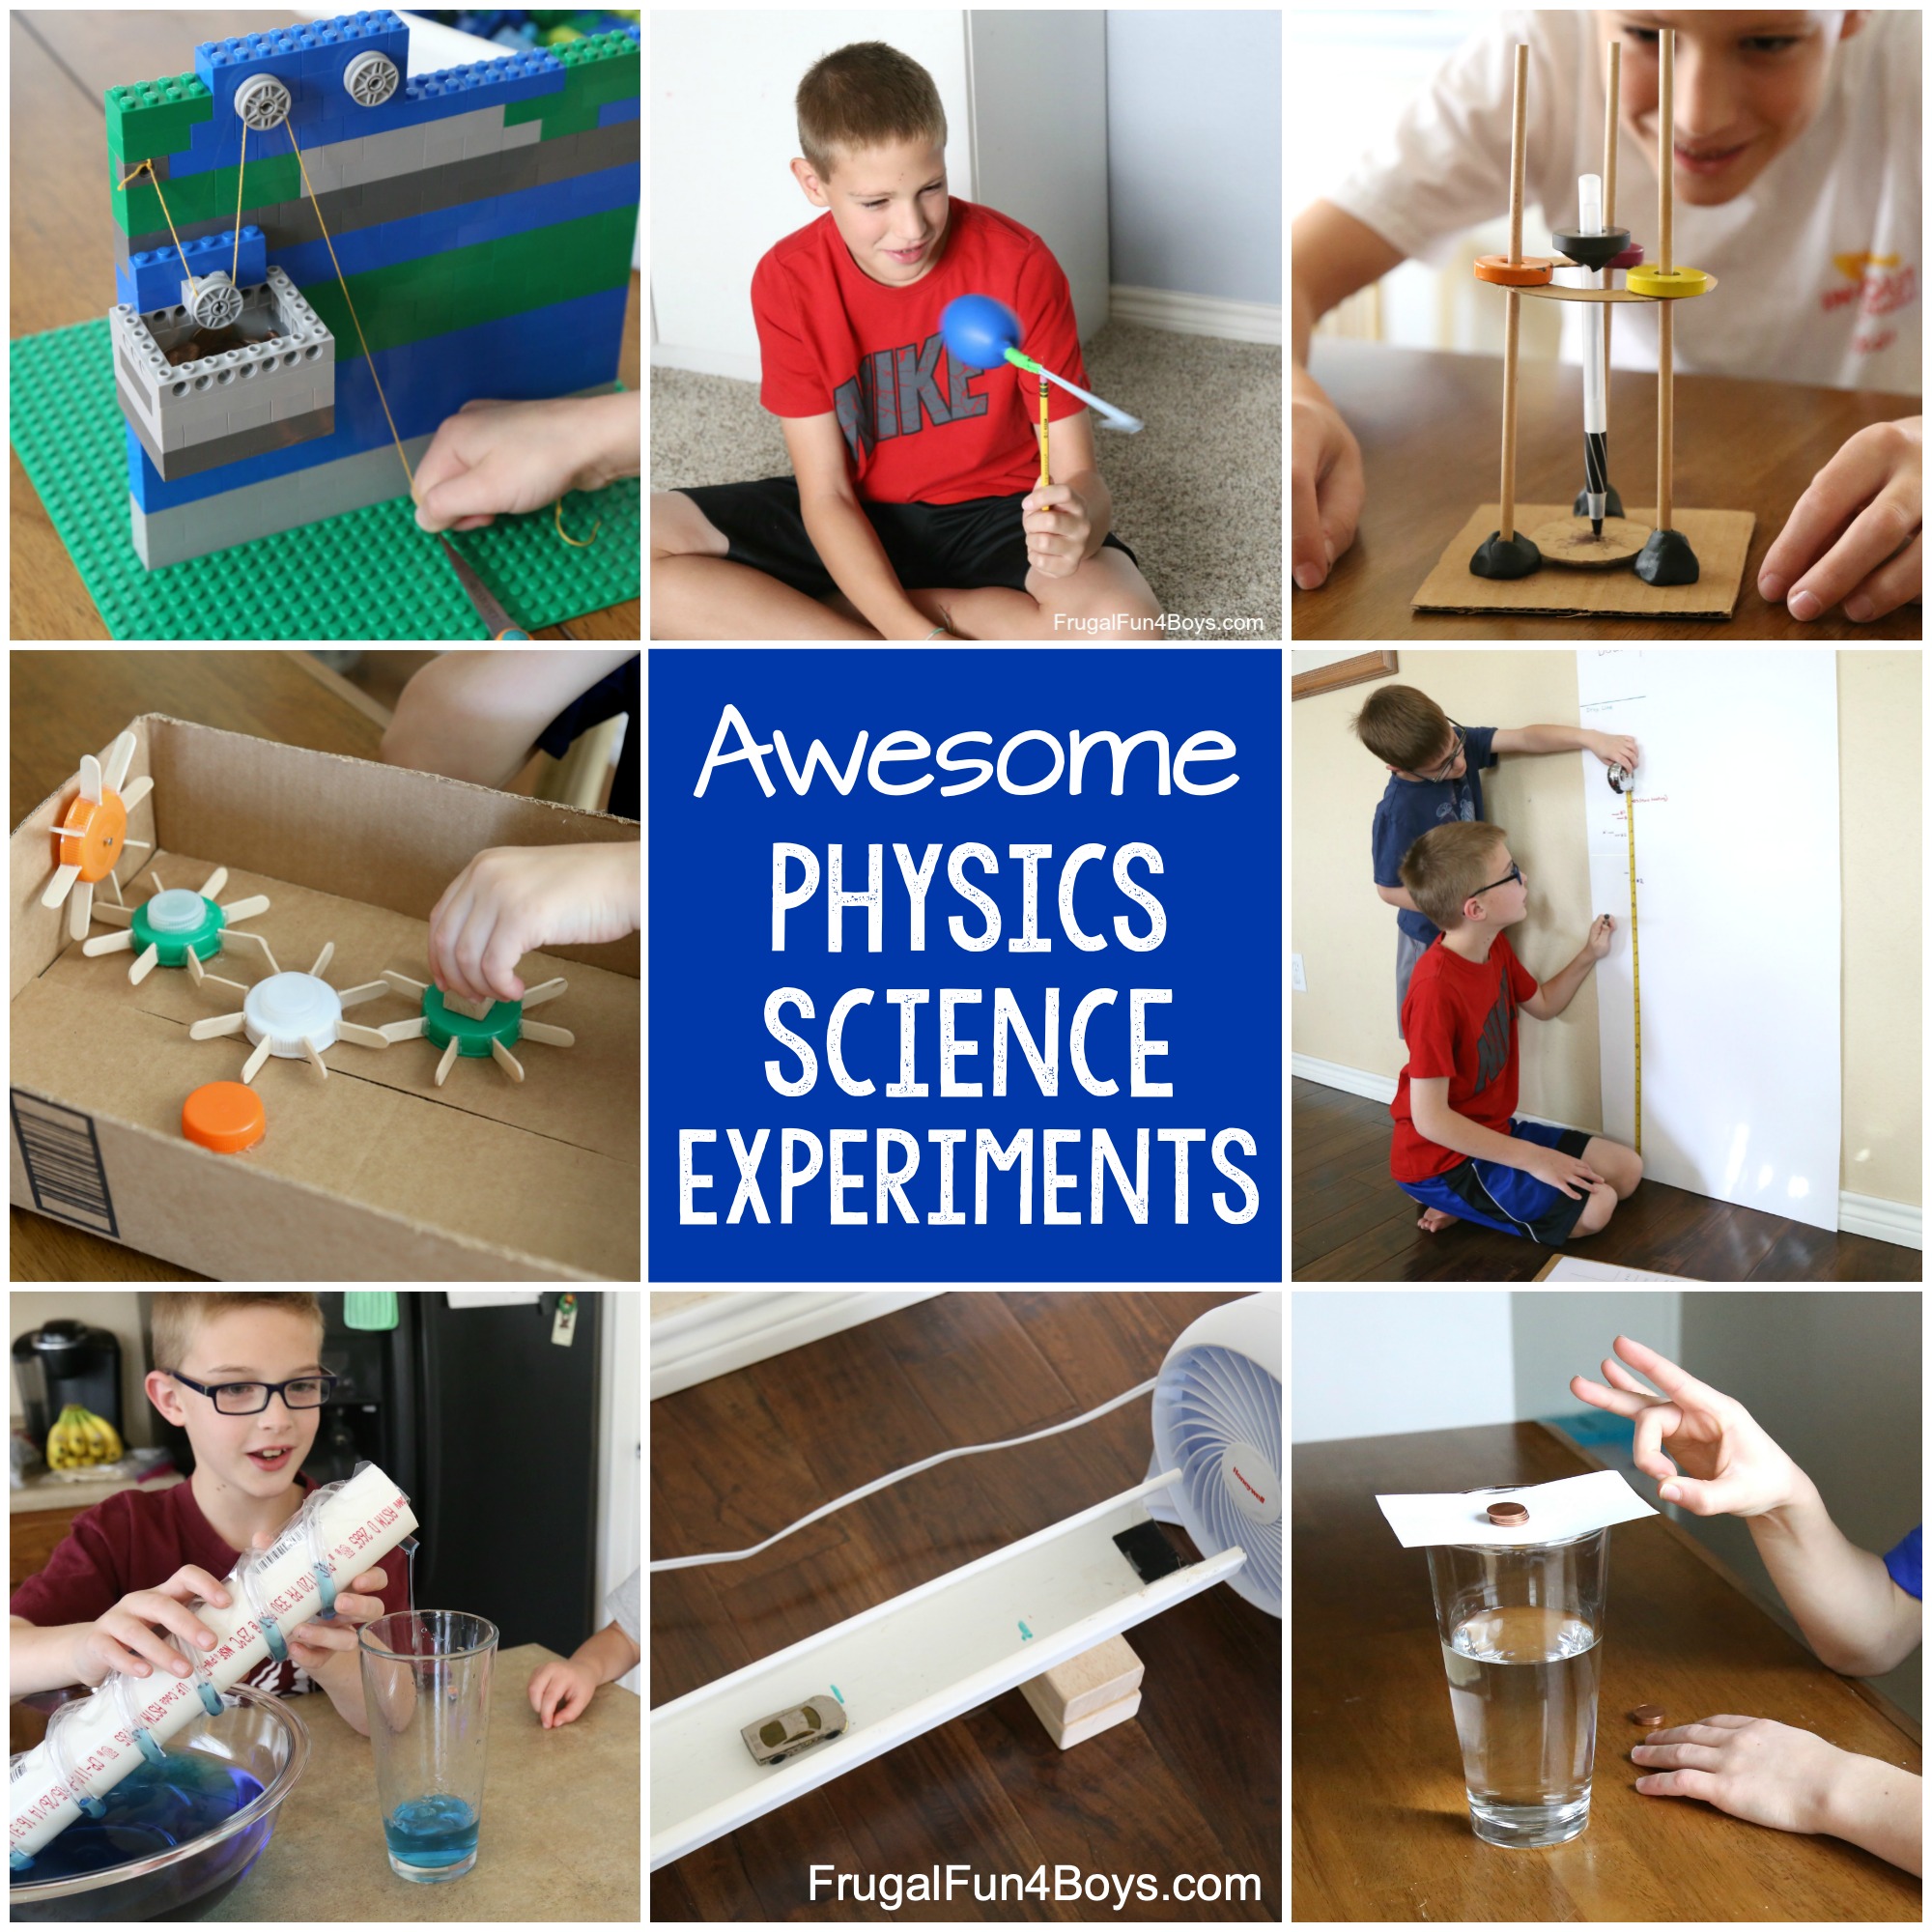 physics experiments based on light